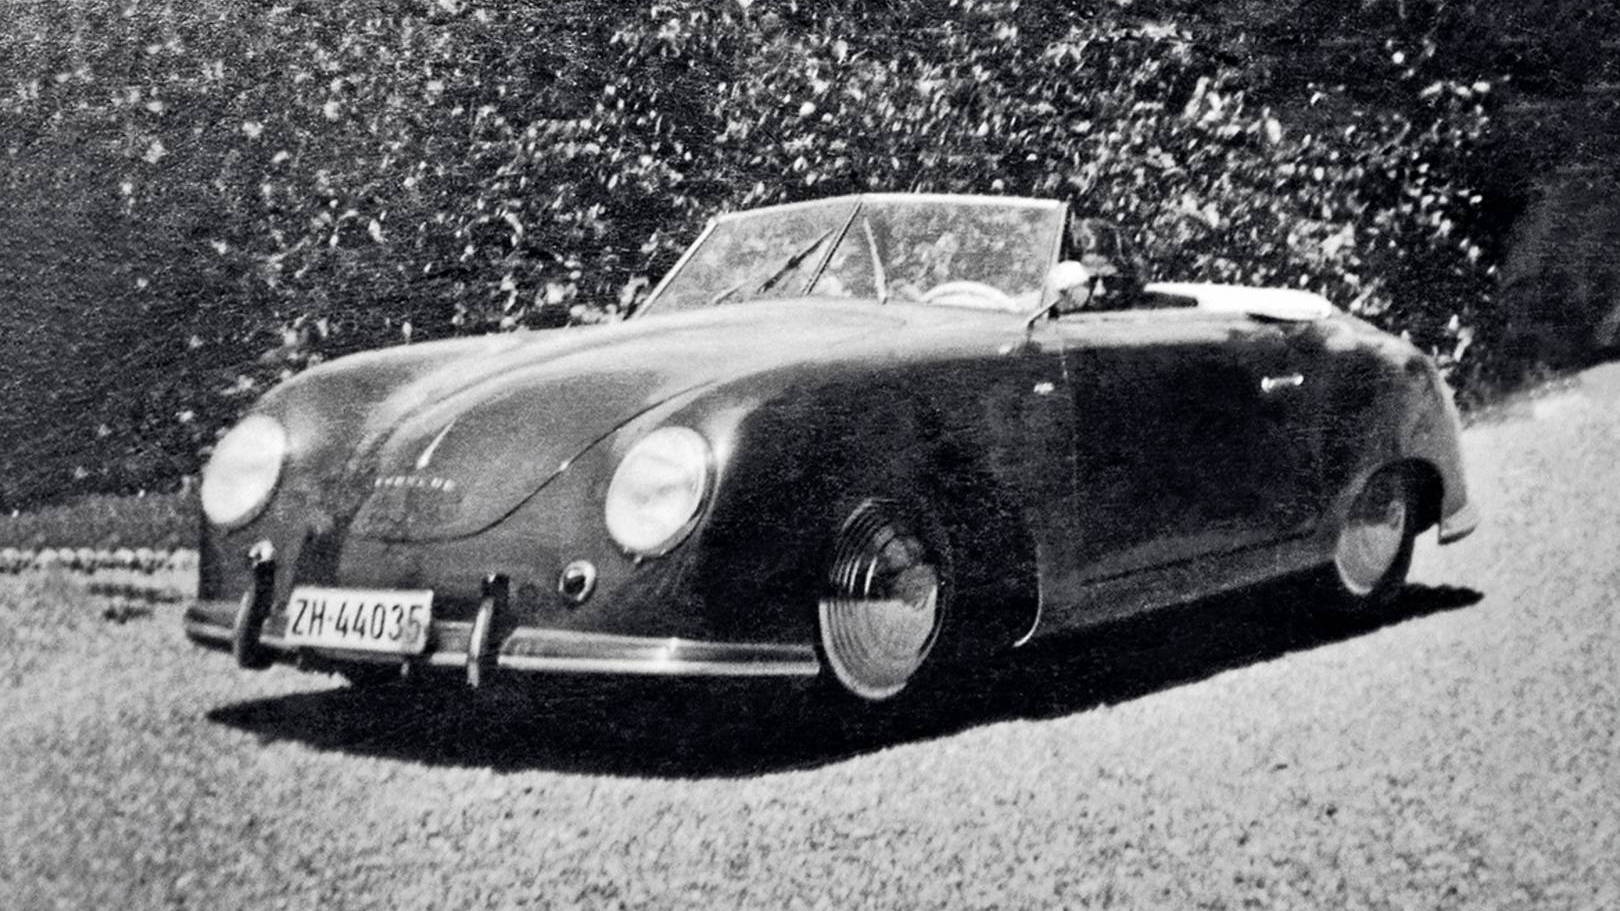 Jolantha Tschudi was the first woman to buy a Porsche